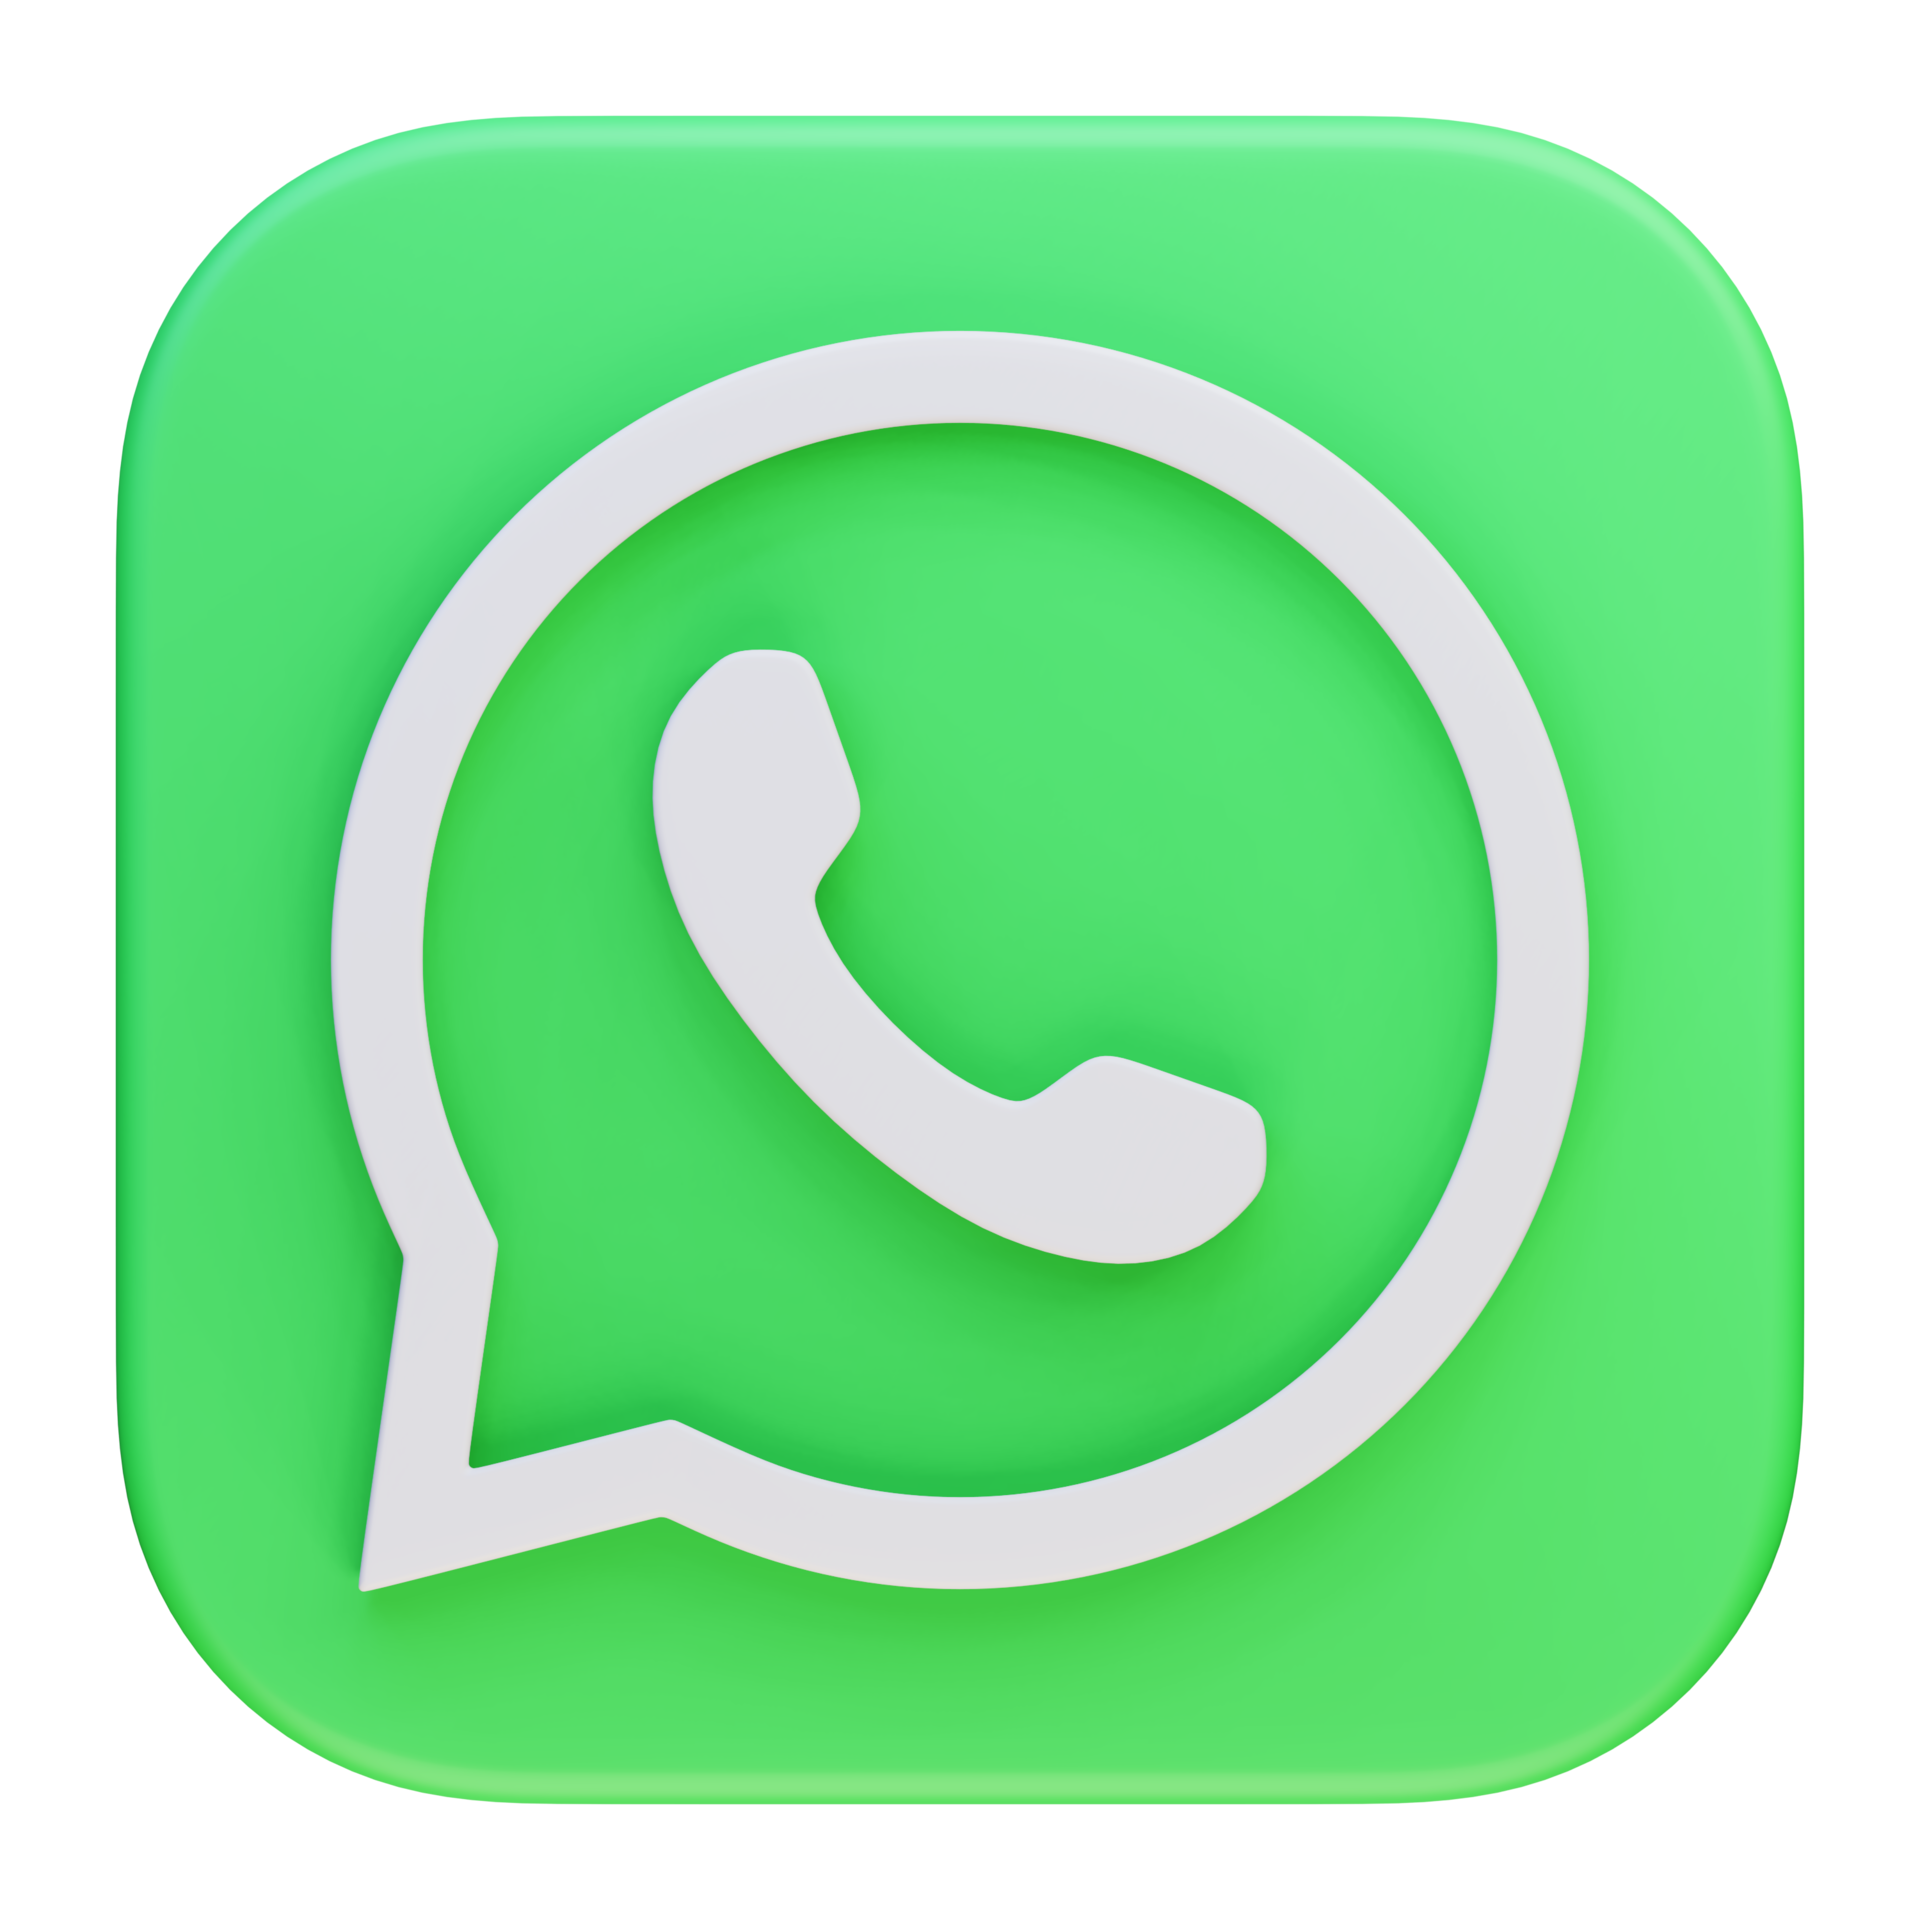 Free Whatsapp Vector Art - Download 50+ Whatsapp Icons & Graphics - Pixabay